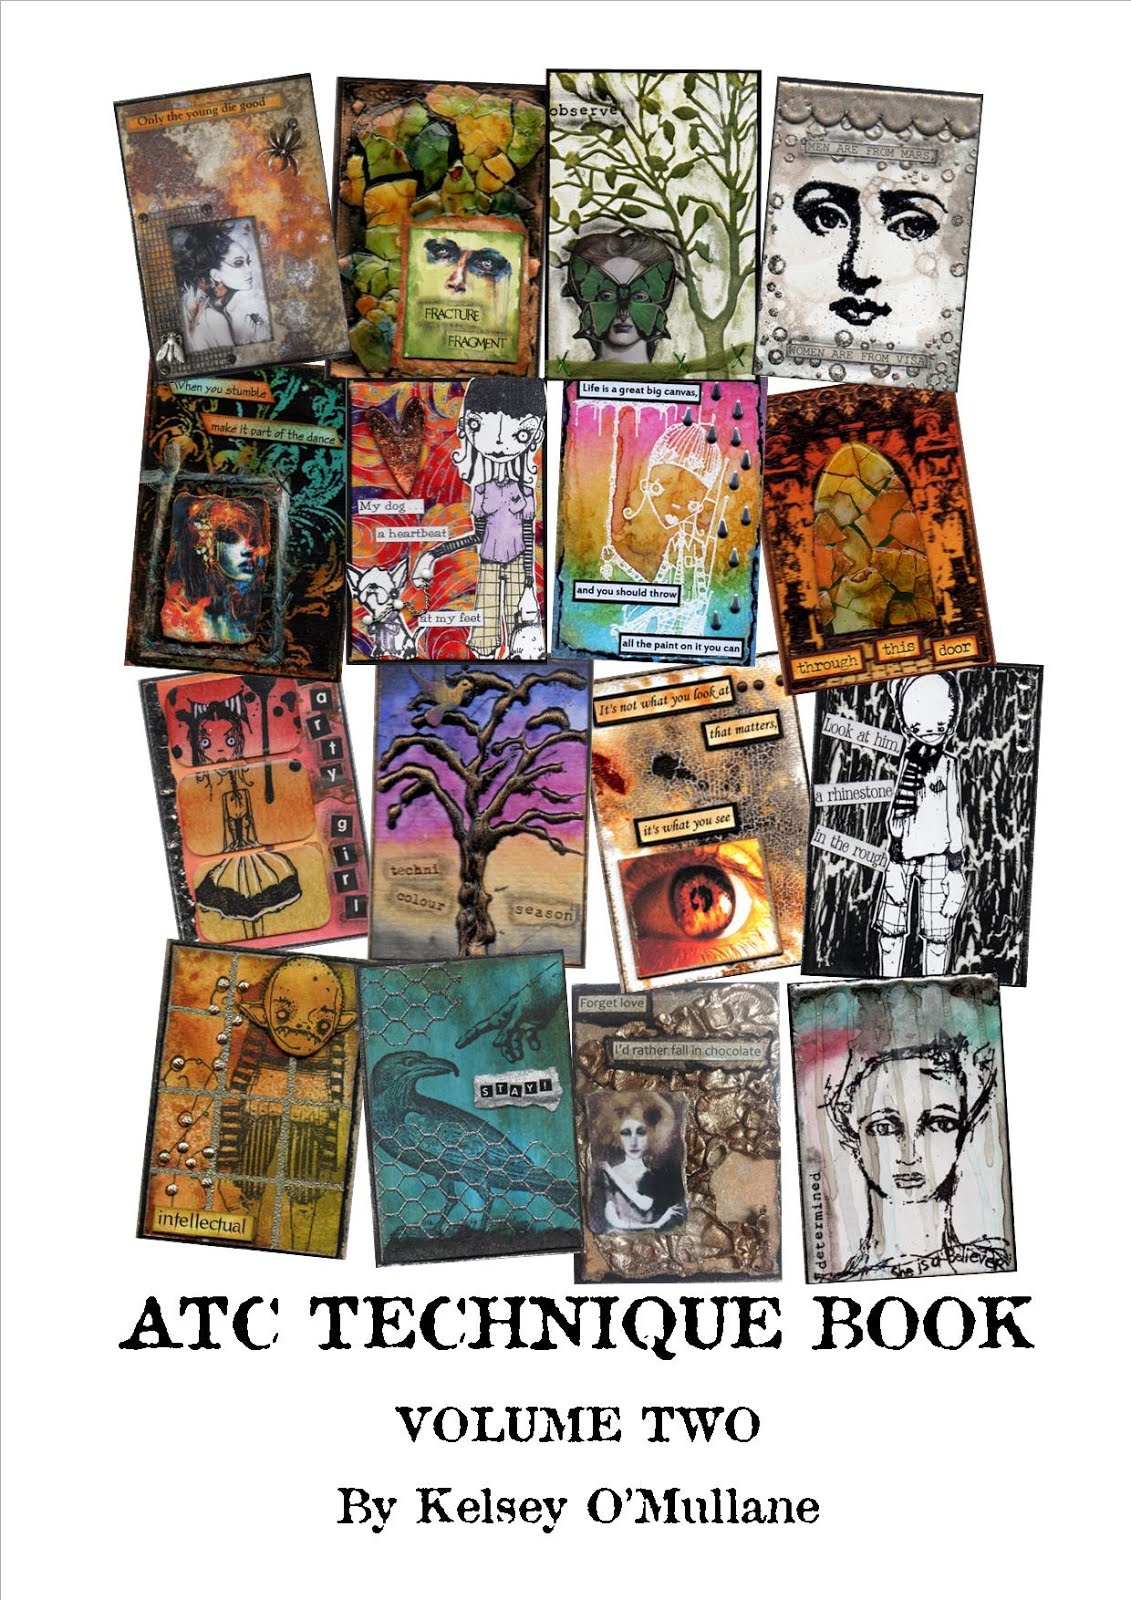 ATC TECHNIQUE BOOK VOLUME II FOR SALE